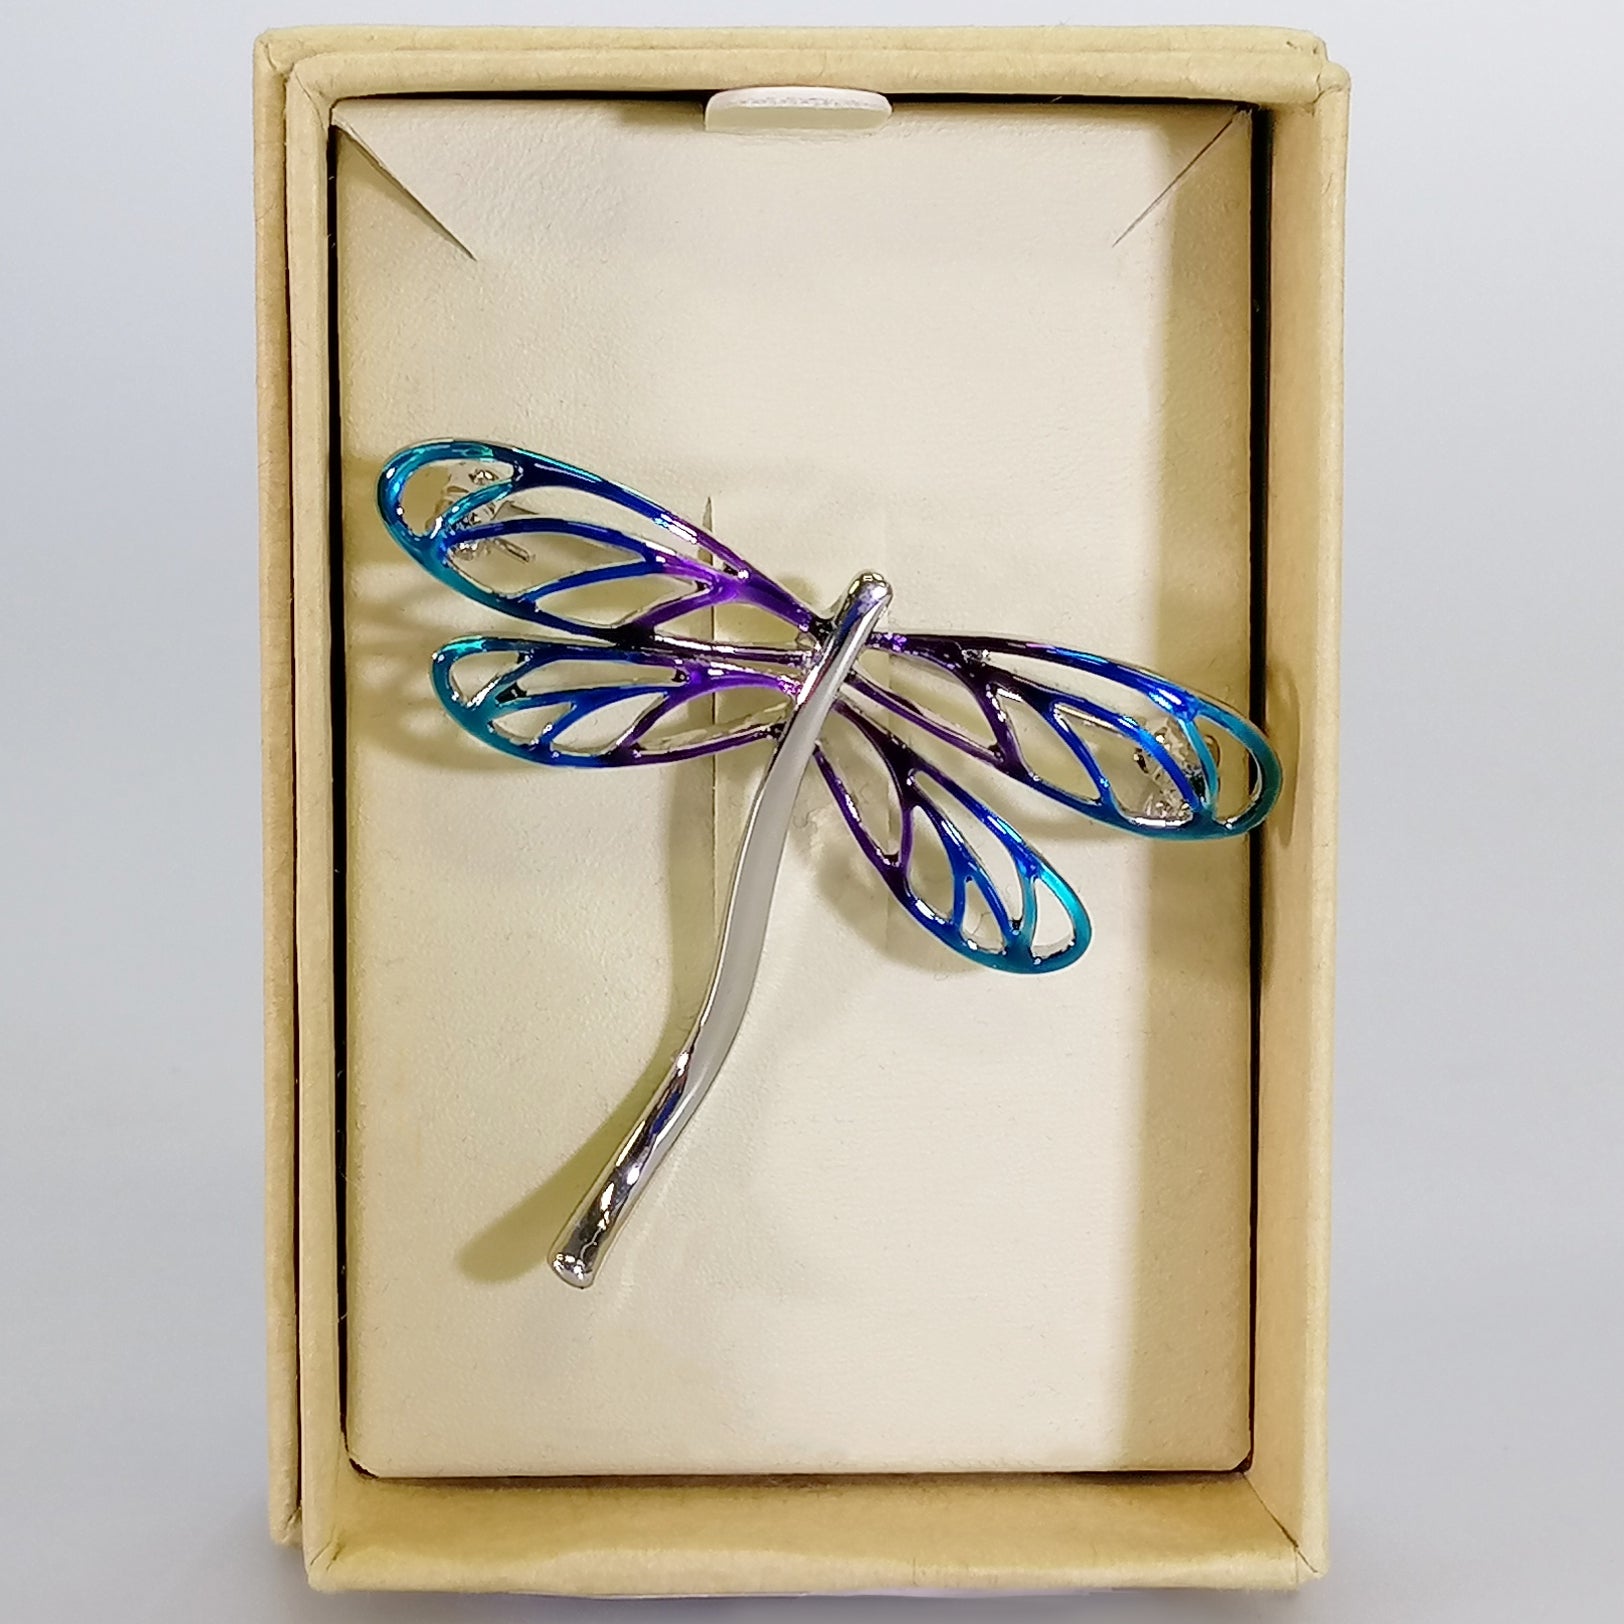 Kiwicraft - Colourful Dragonfly Brooch